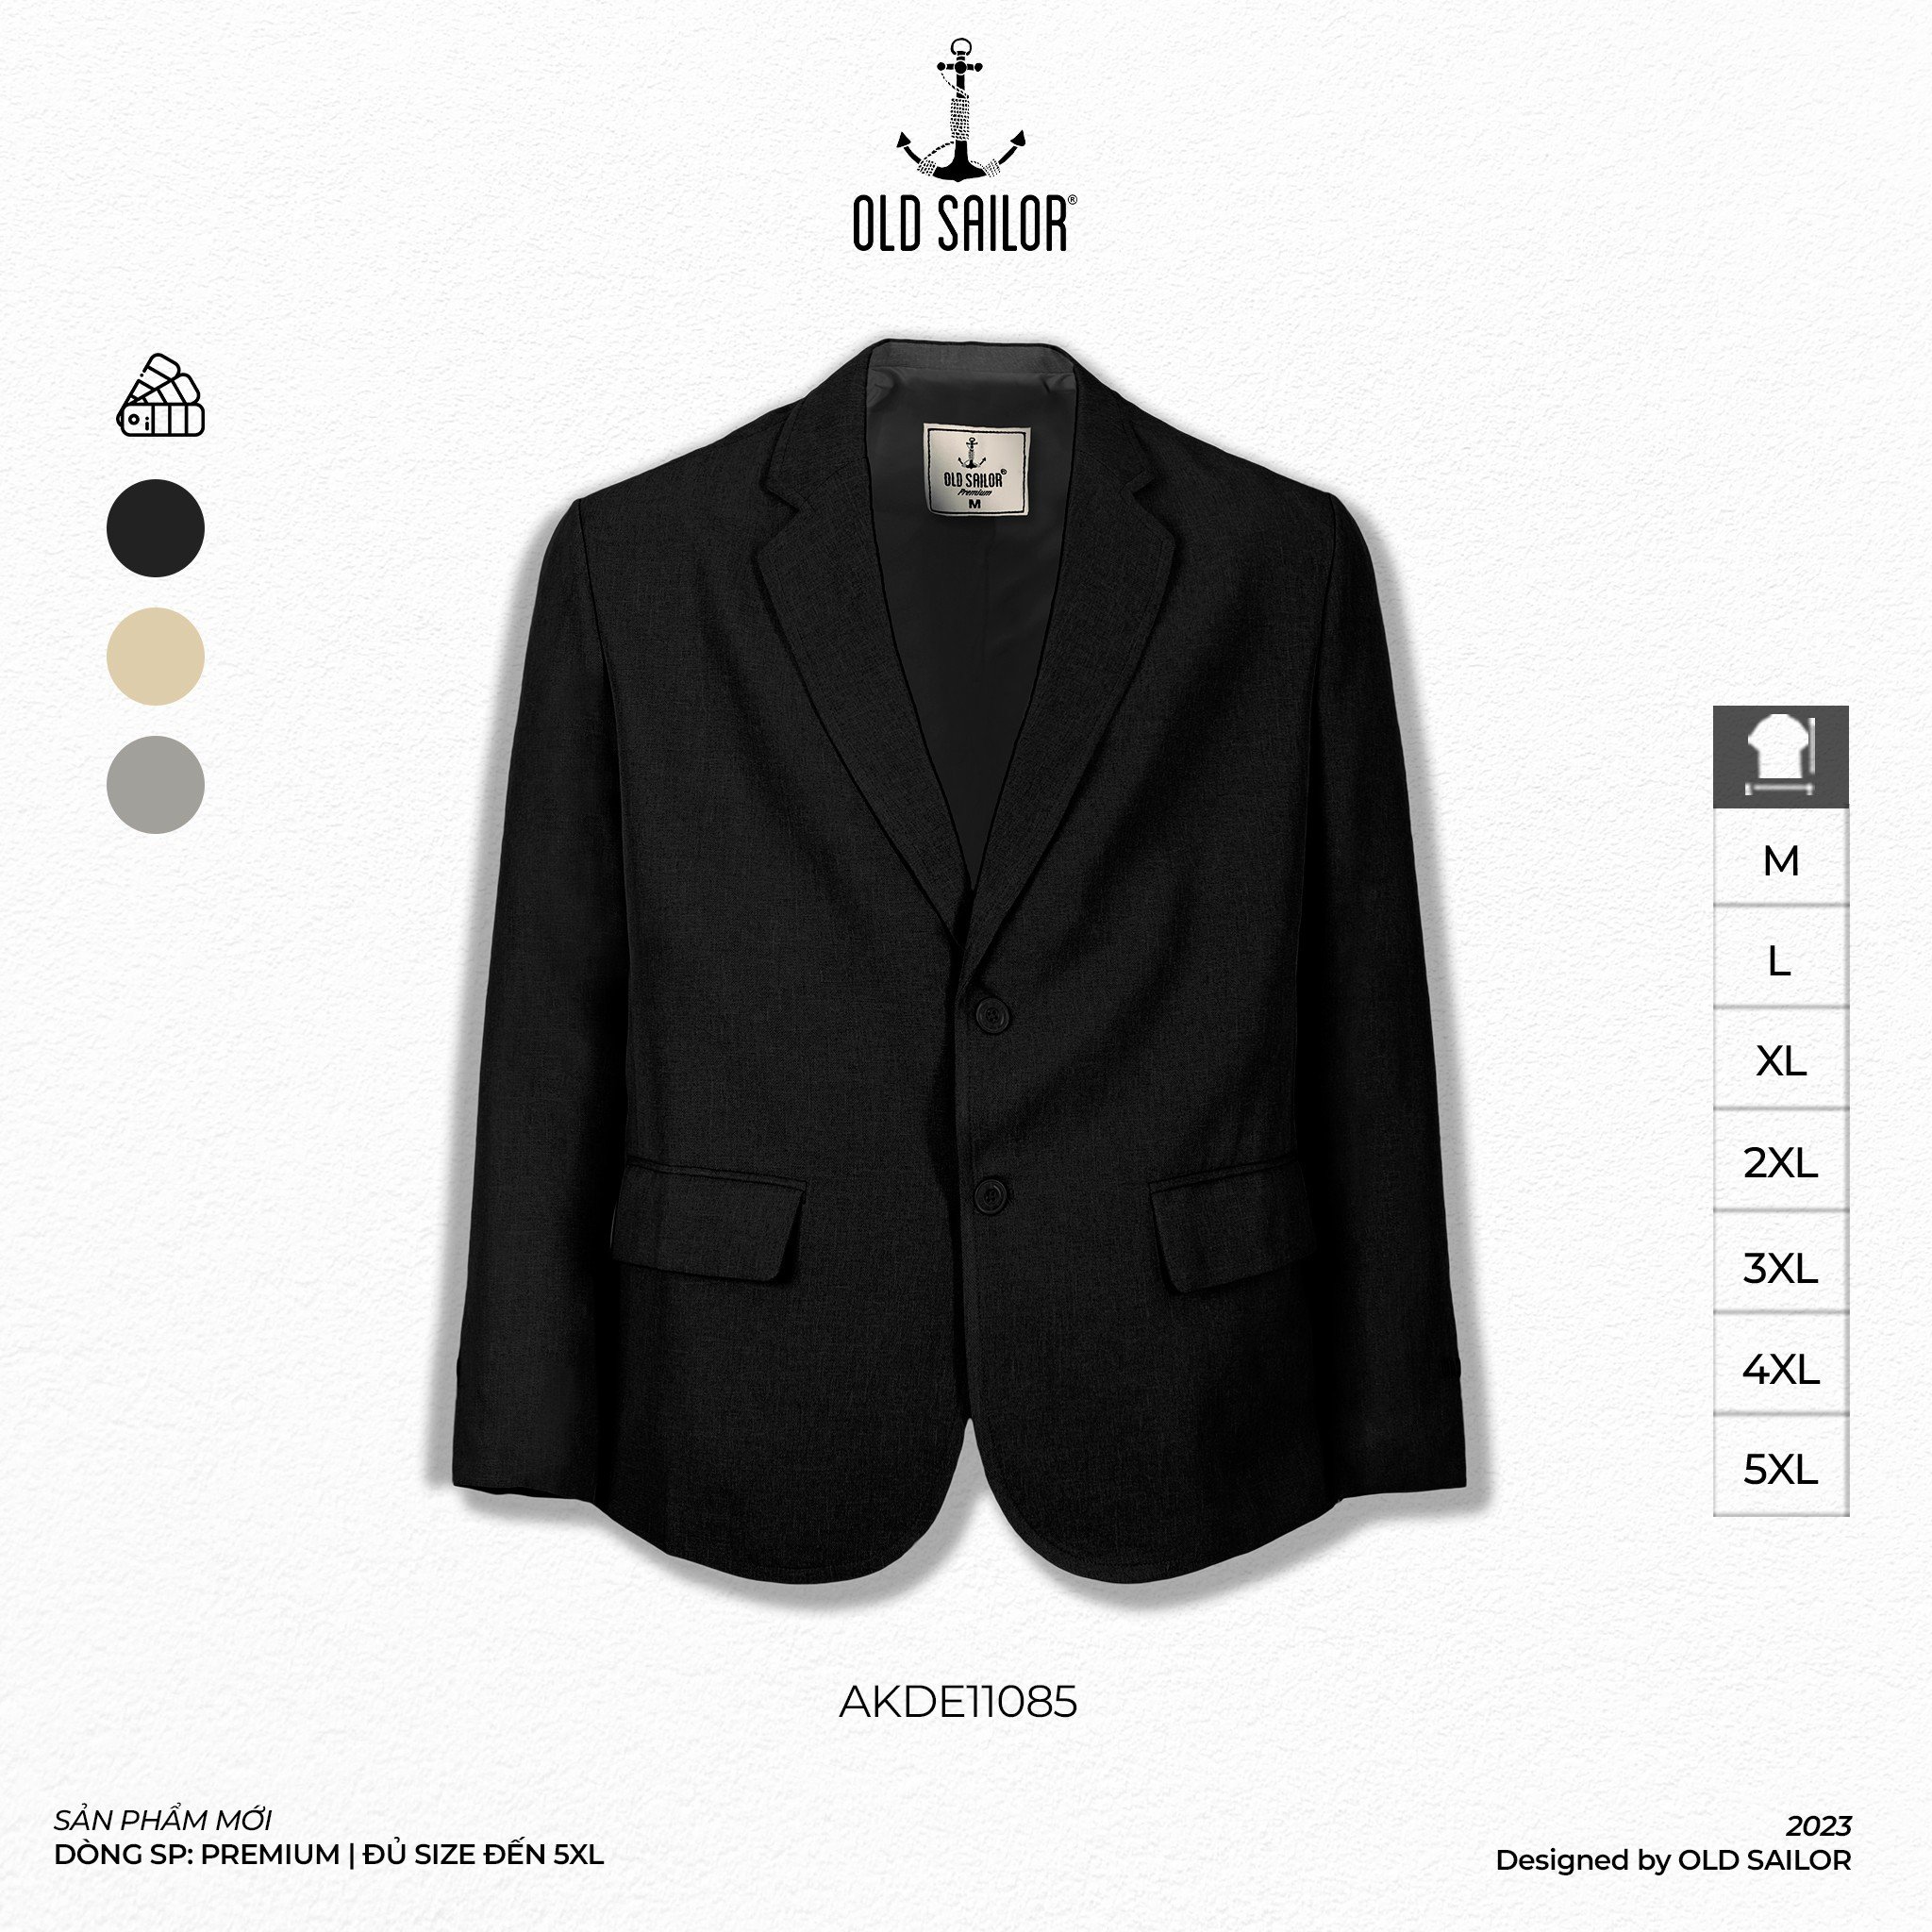 Áo khoác blazer Old Sailor - O.S.L PREMIUM BLAZER - AKDE11085 - đen - Big size upto 5XL